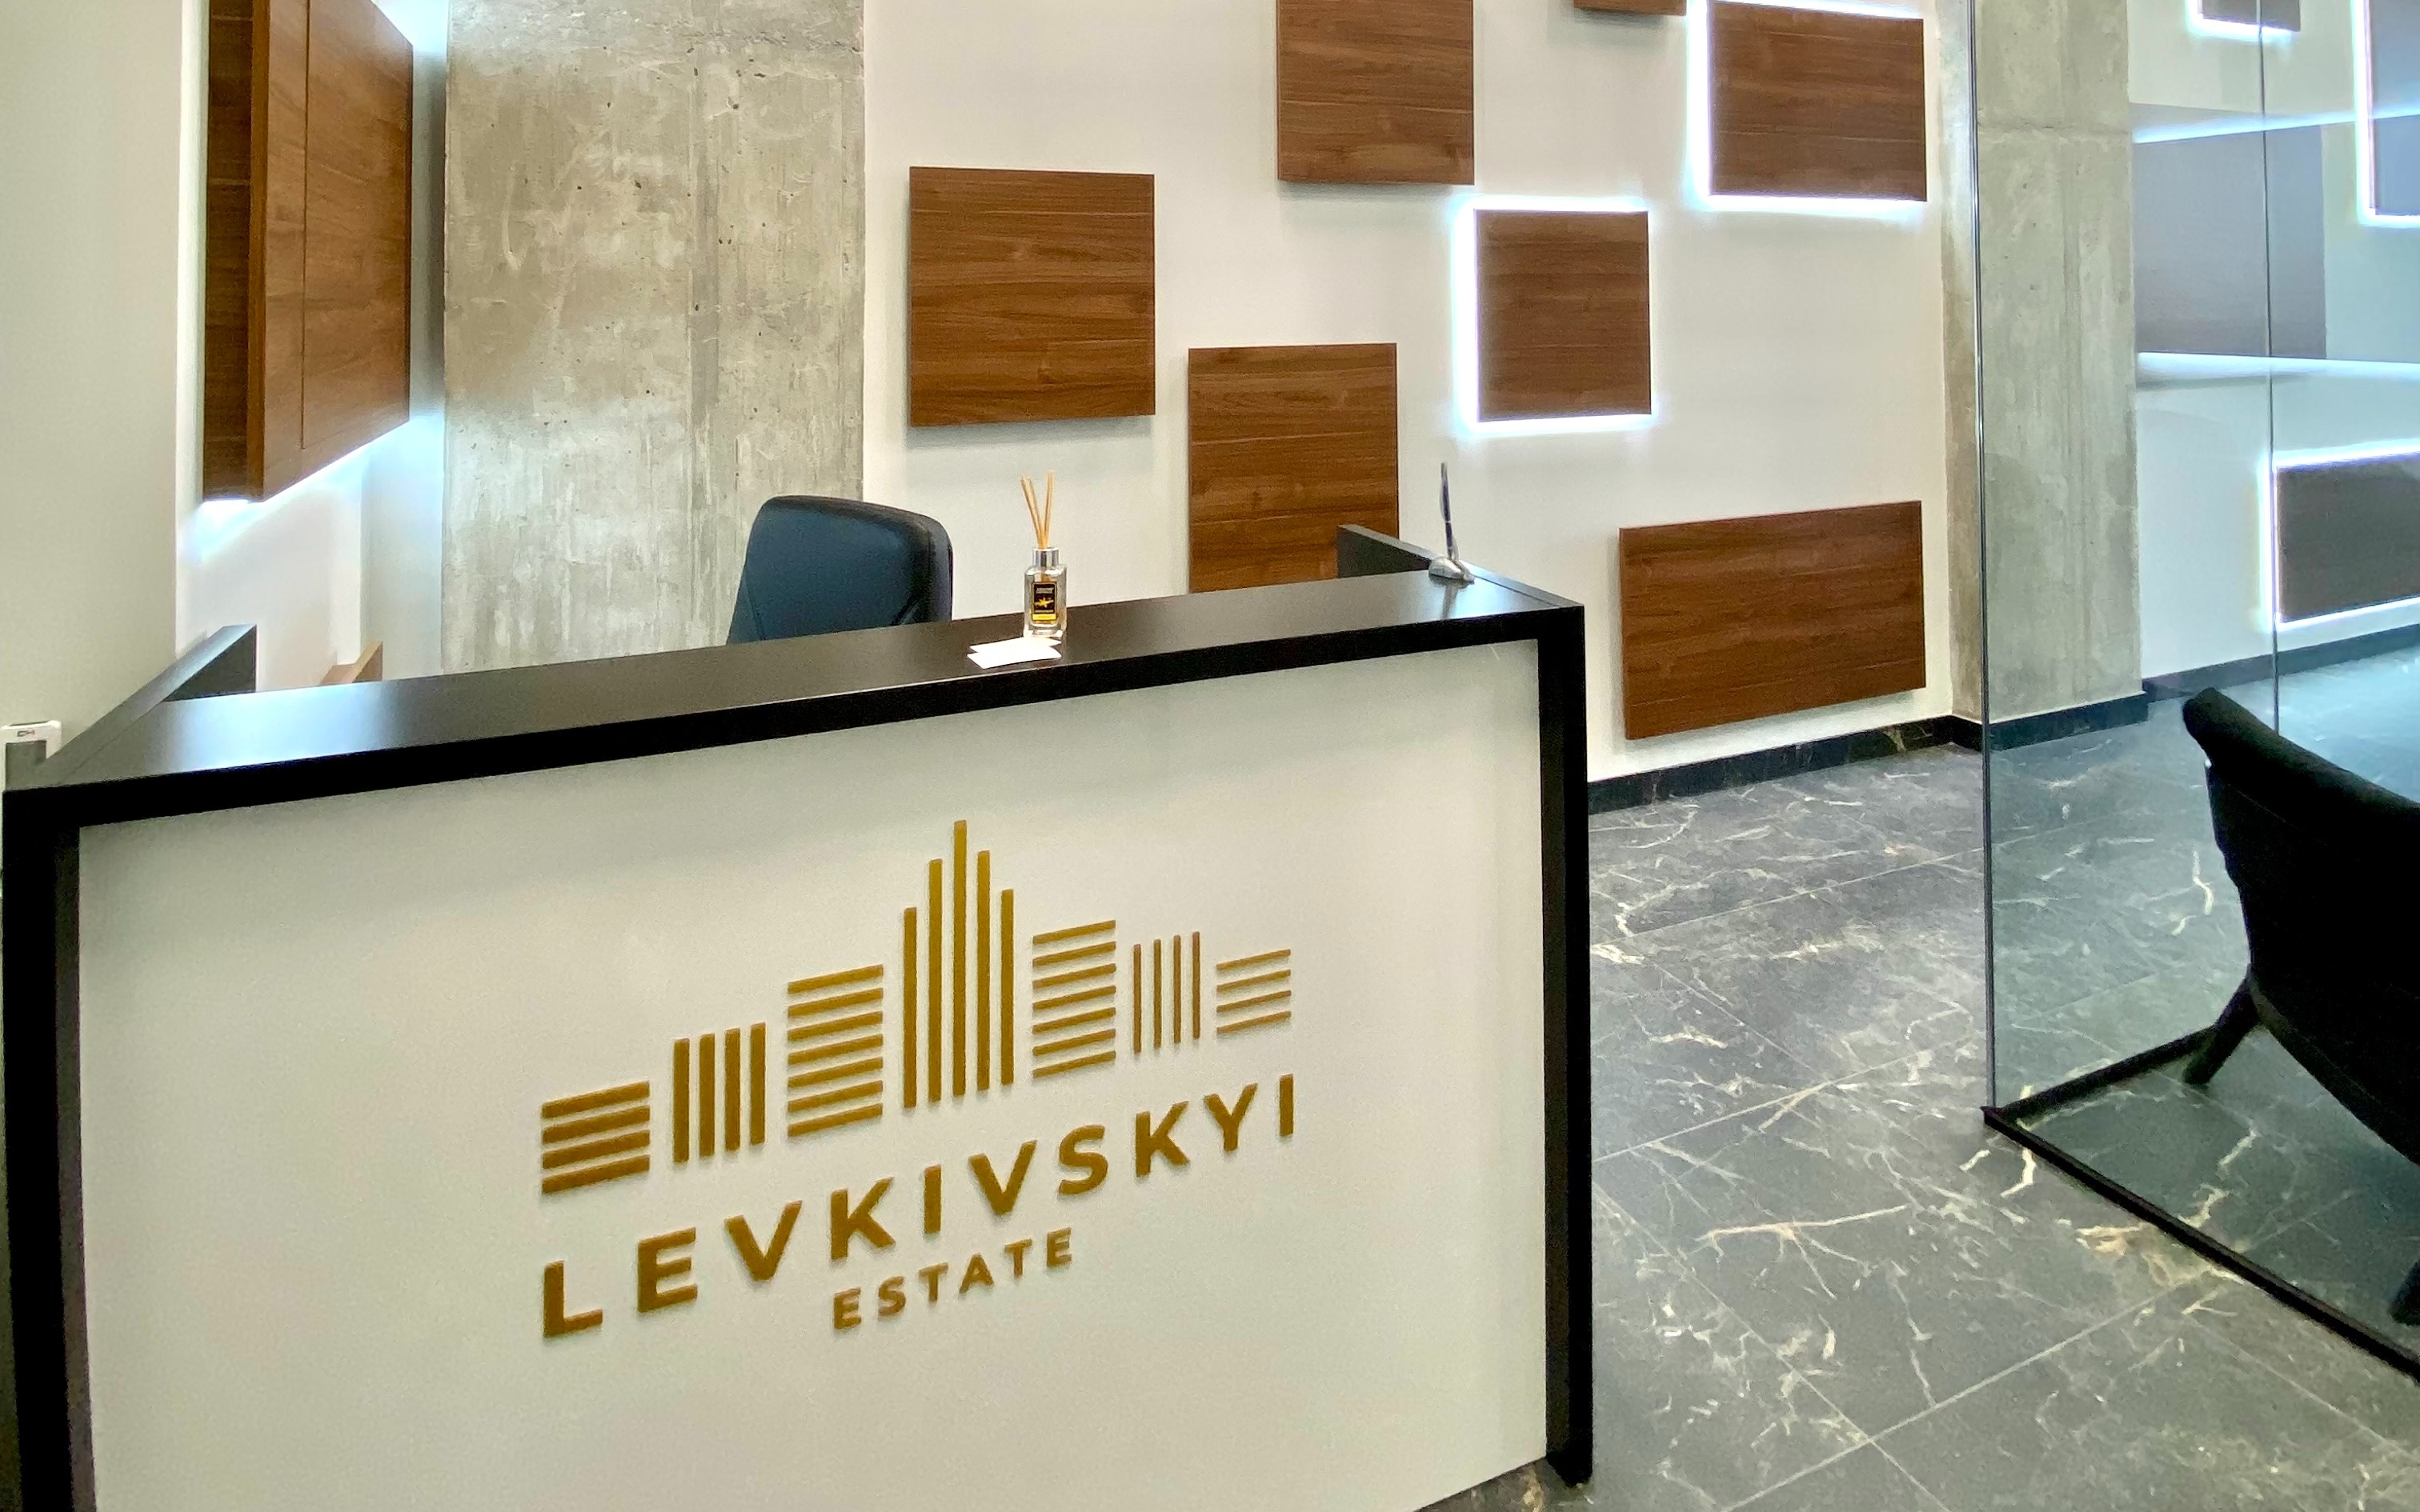 Levkivskyi Estate — вакансия в Менеджер по недвижимости